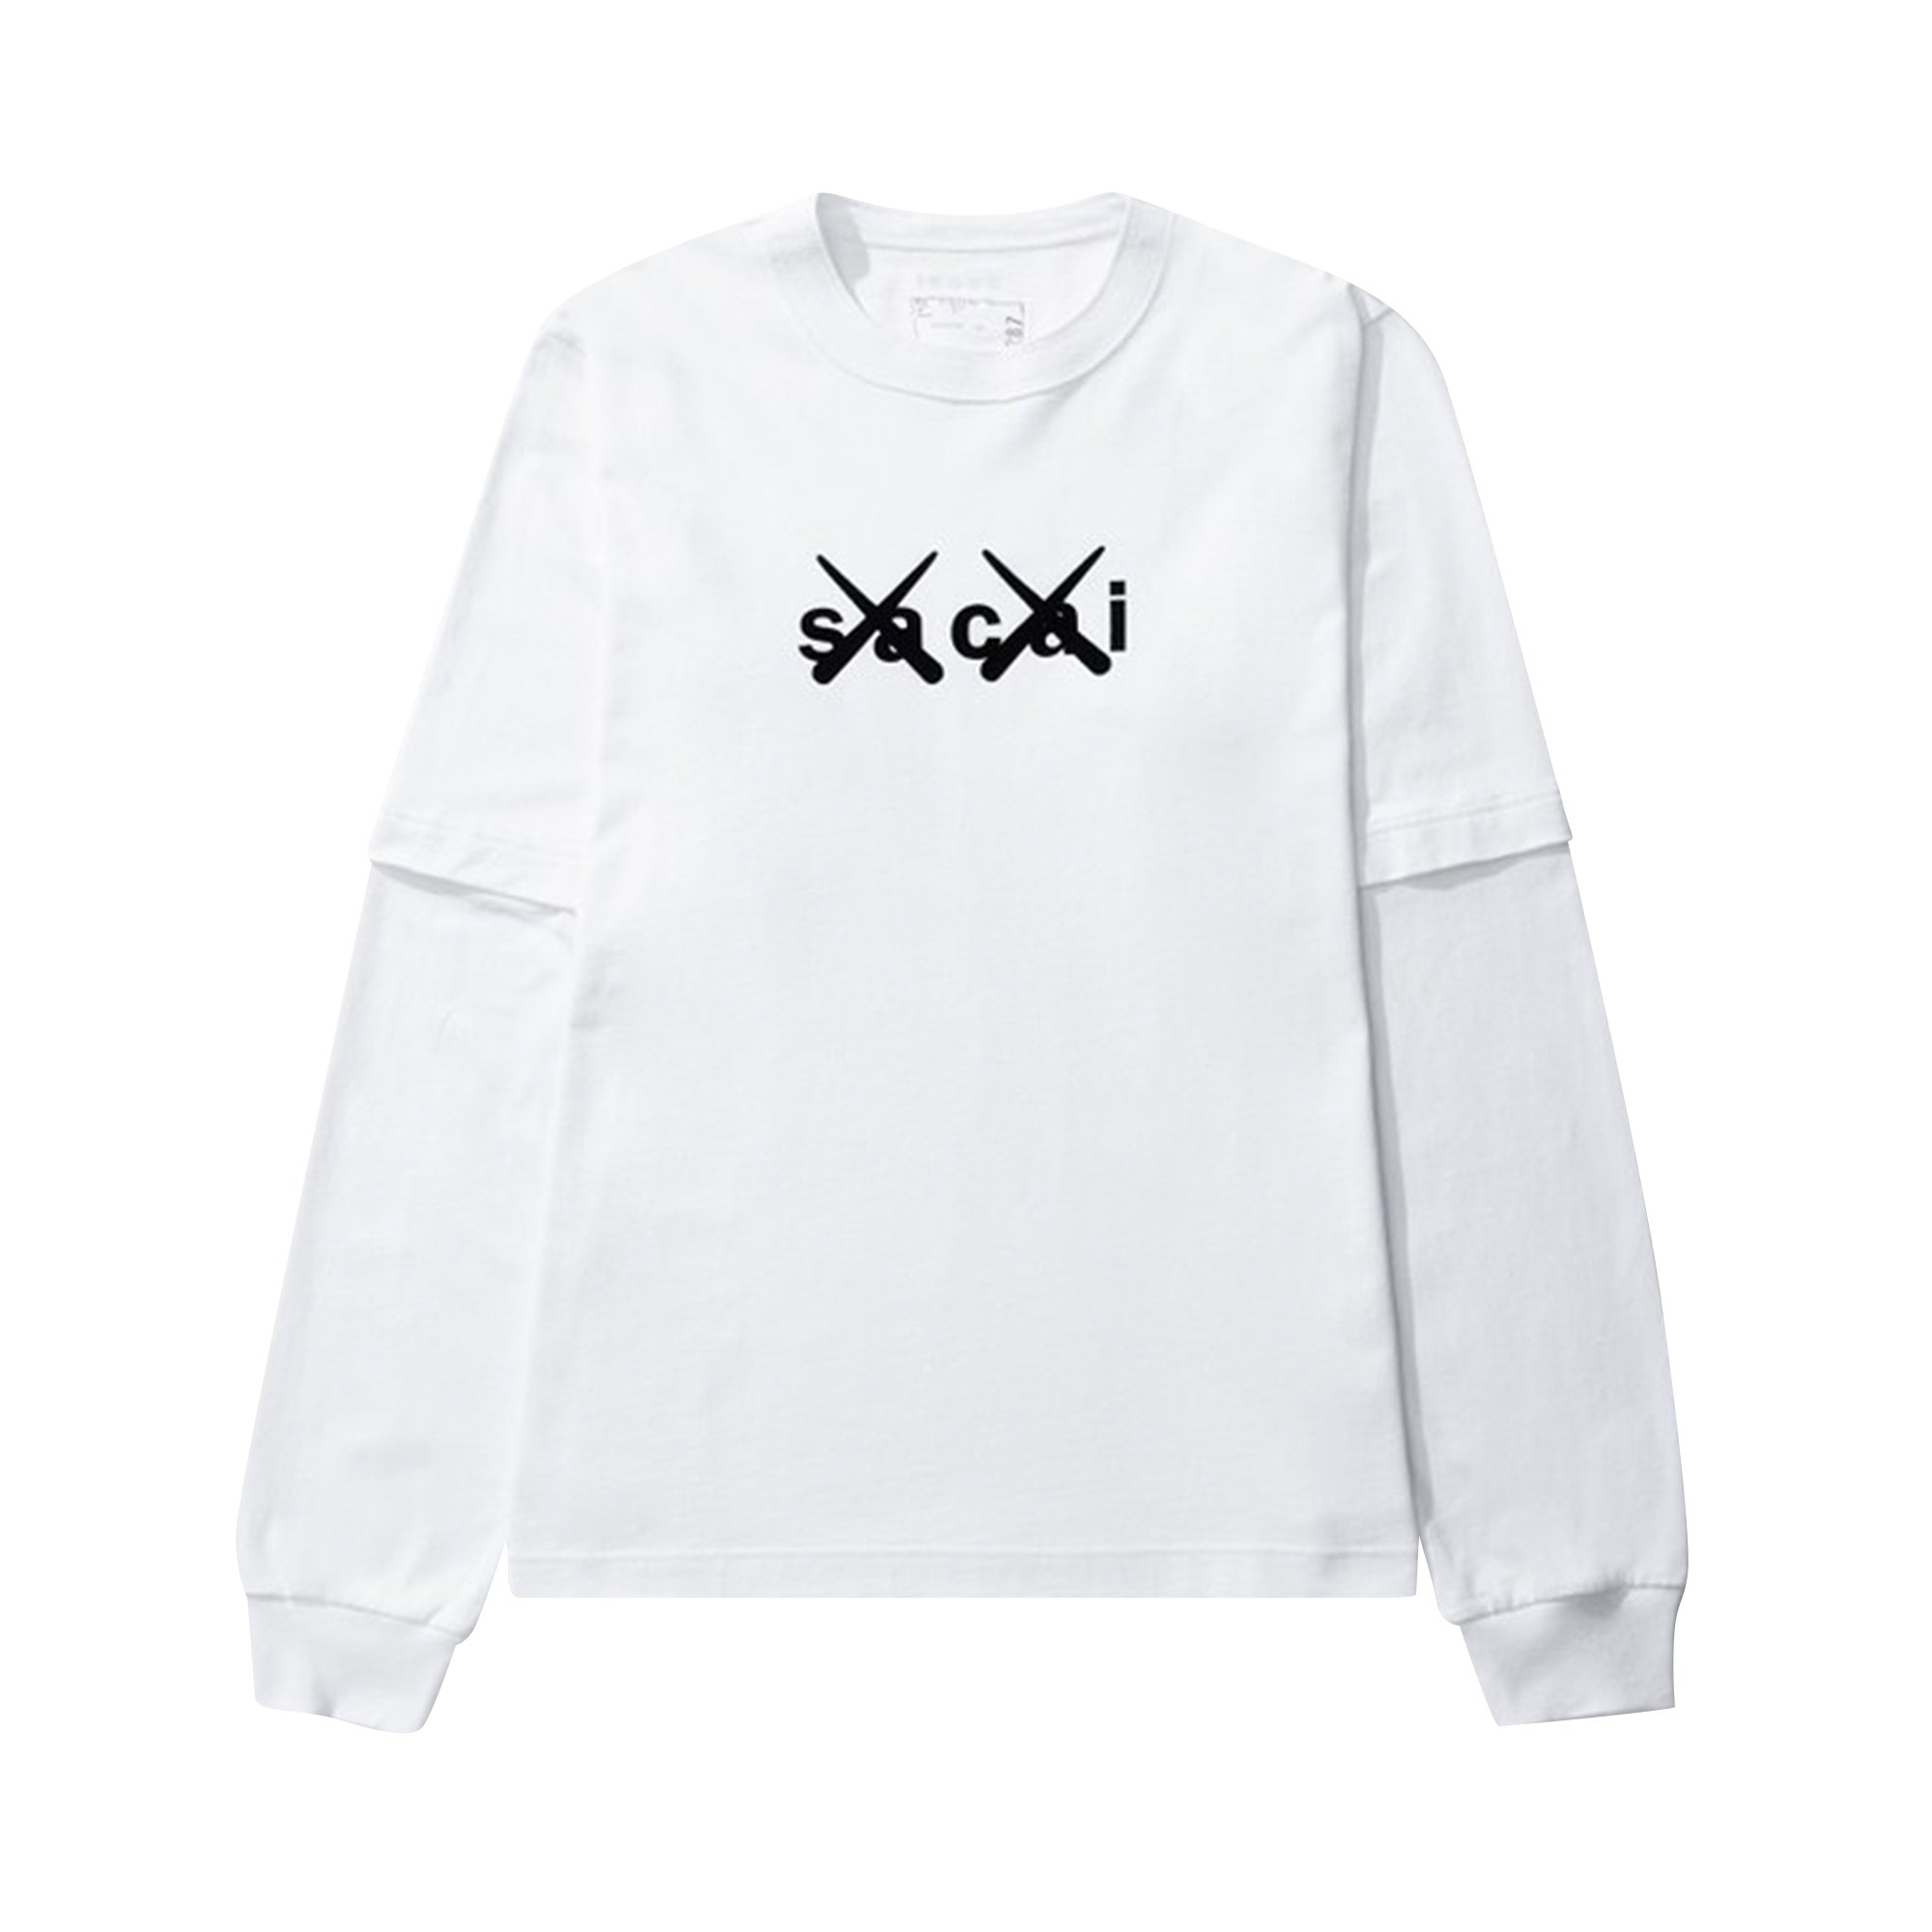 Sacai x KAWS Flock Print Long-Sleeve T-Shirt 'White/Black' | GOAT